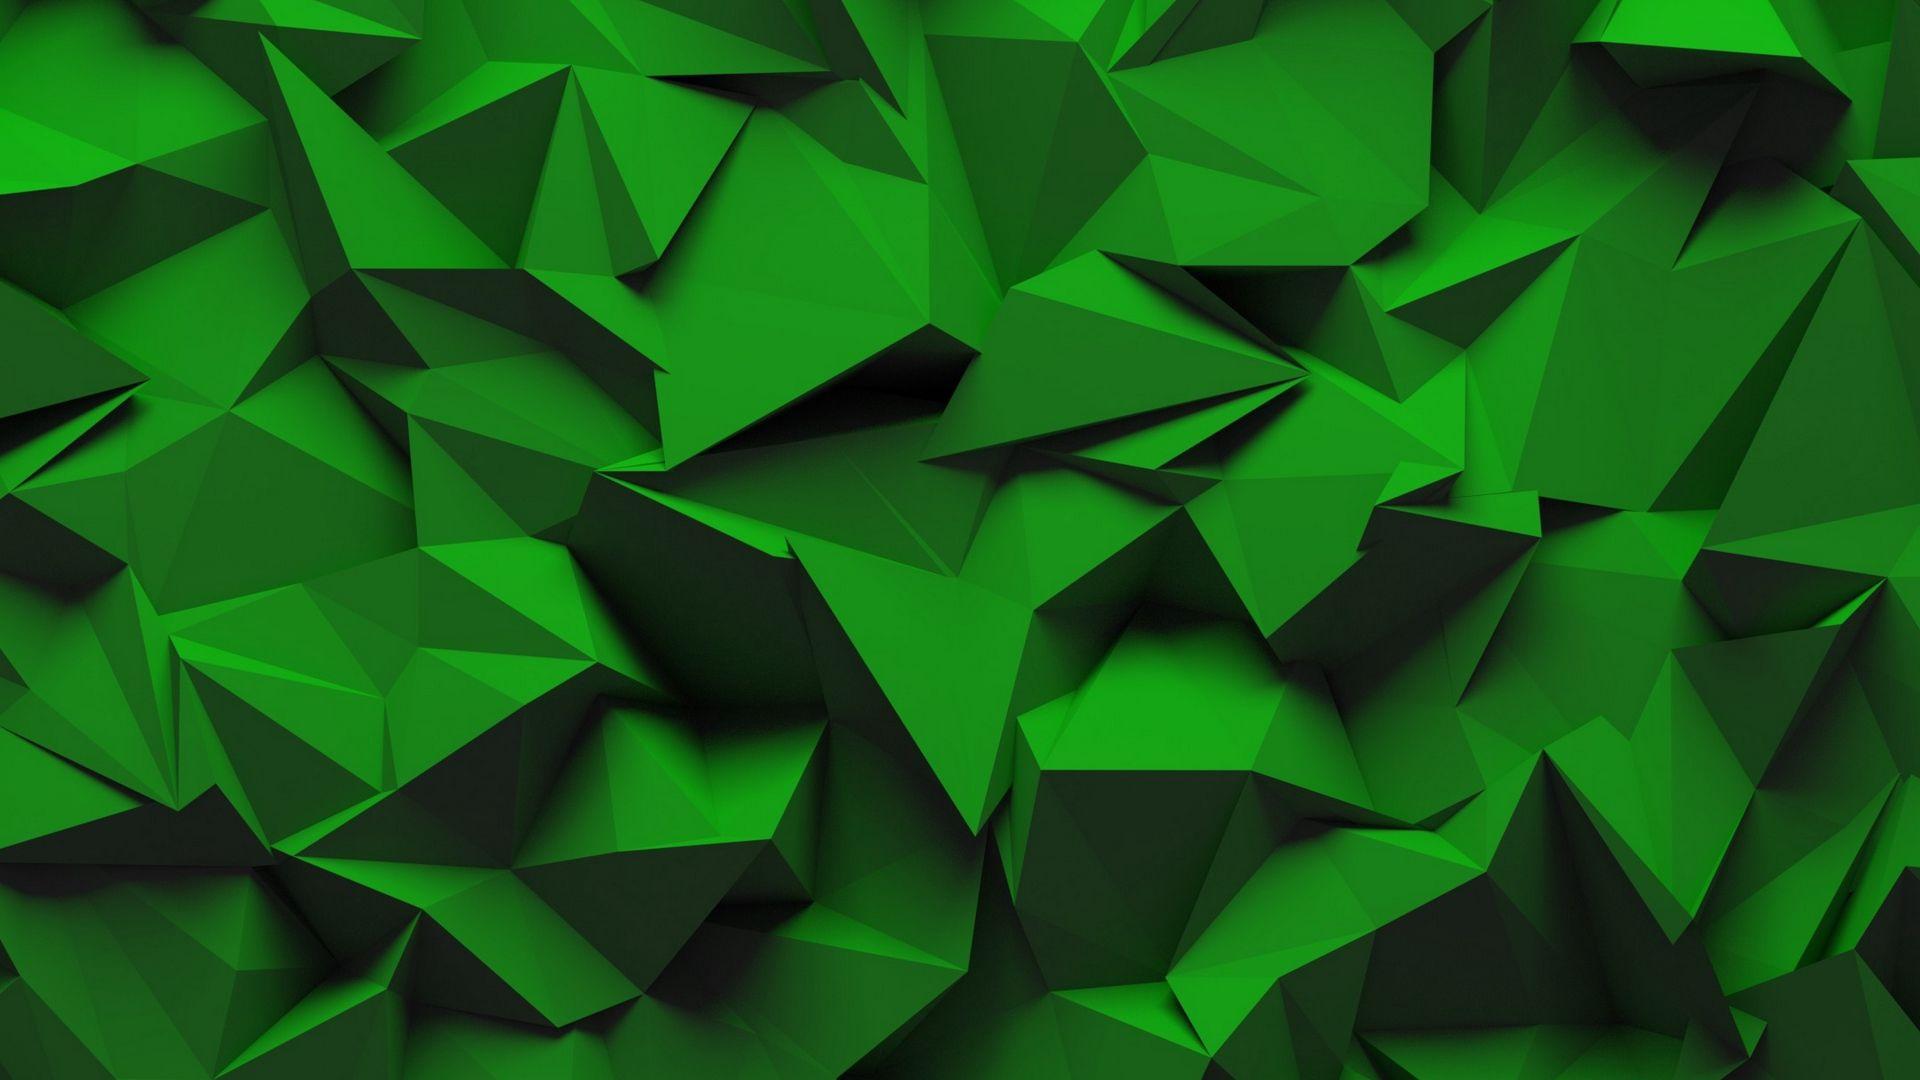 Green Geometric Wallpapers - Top Free ...